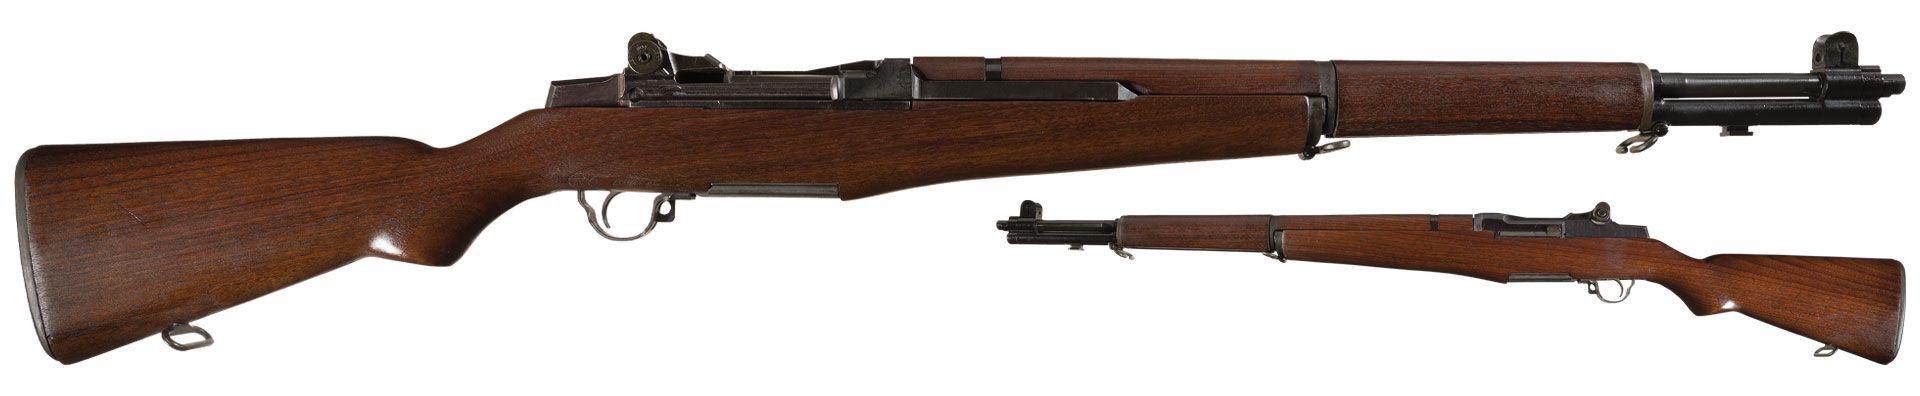 Harrington & Richardson "BURRING/SAMPLE" M1 Garand Rifle